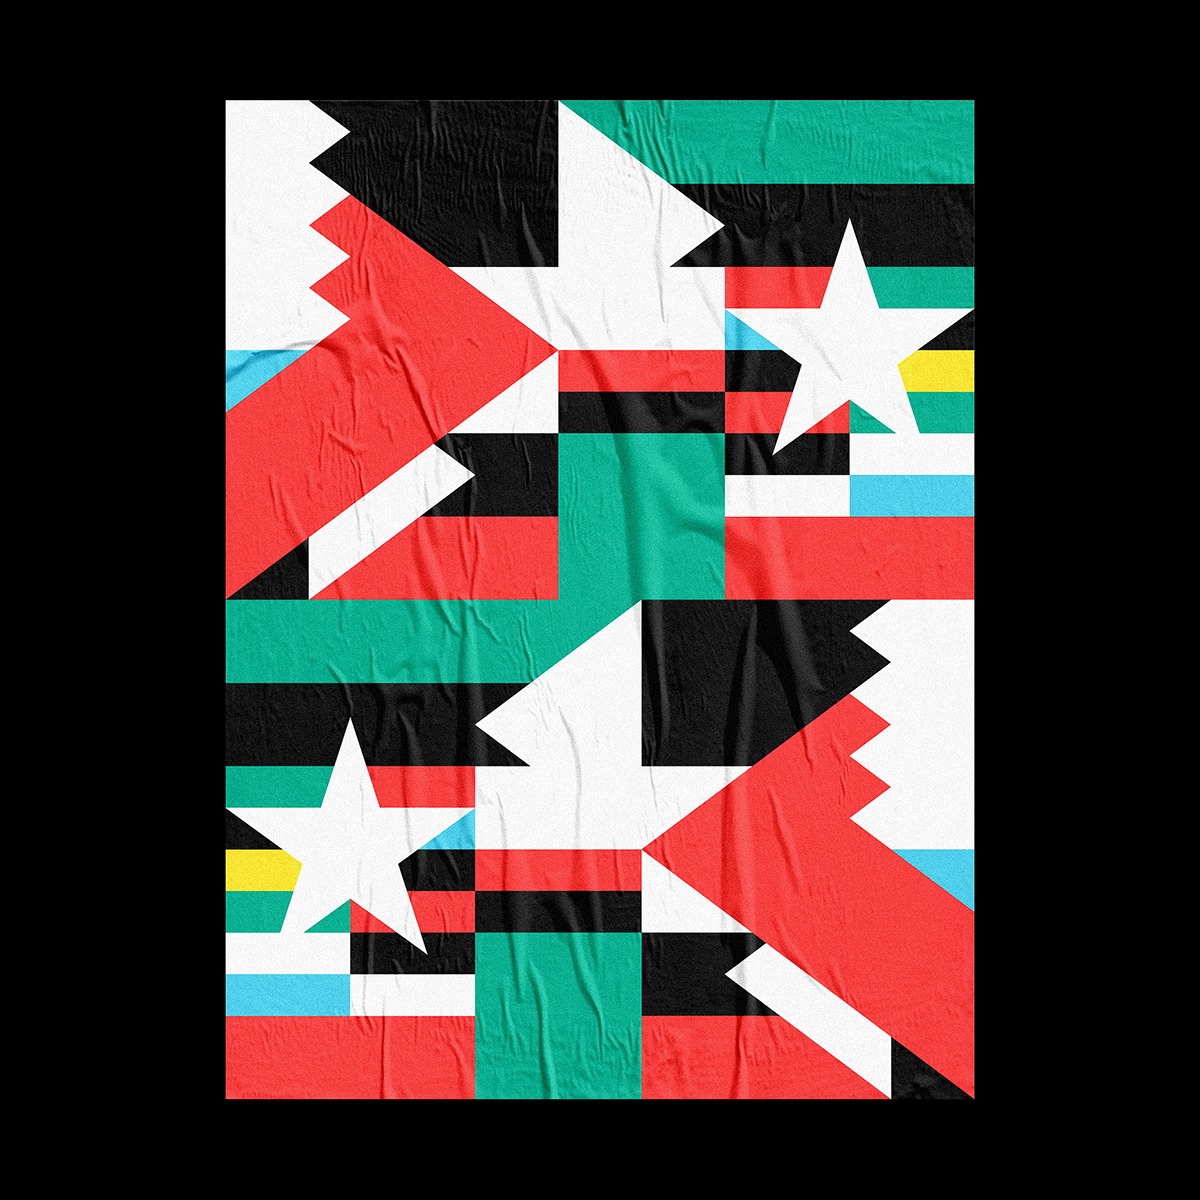 Arab arabic flags flag arab design amman jordan palestine politics political